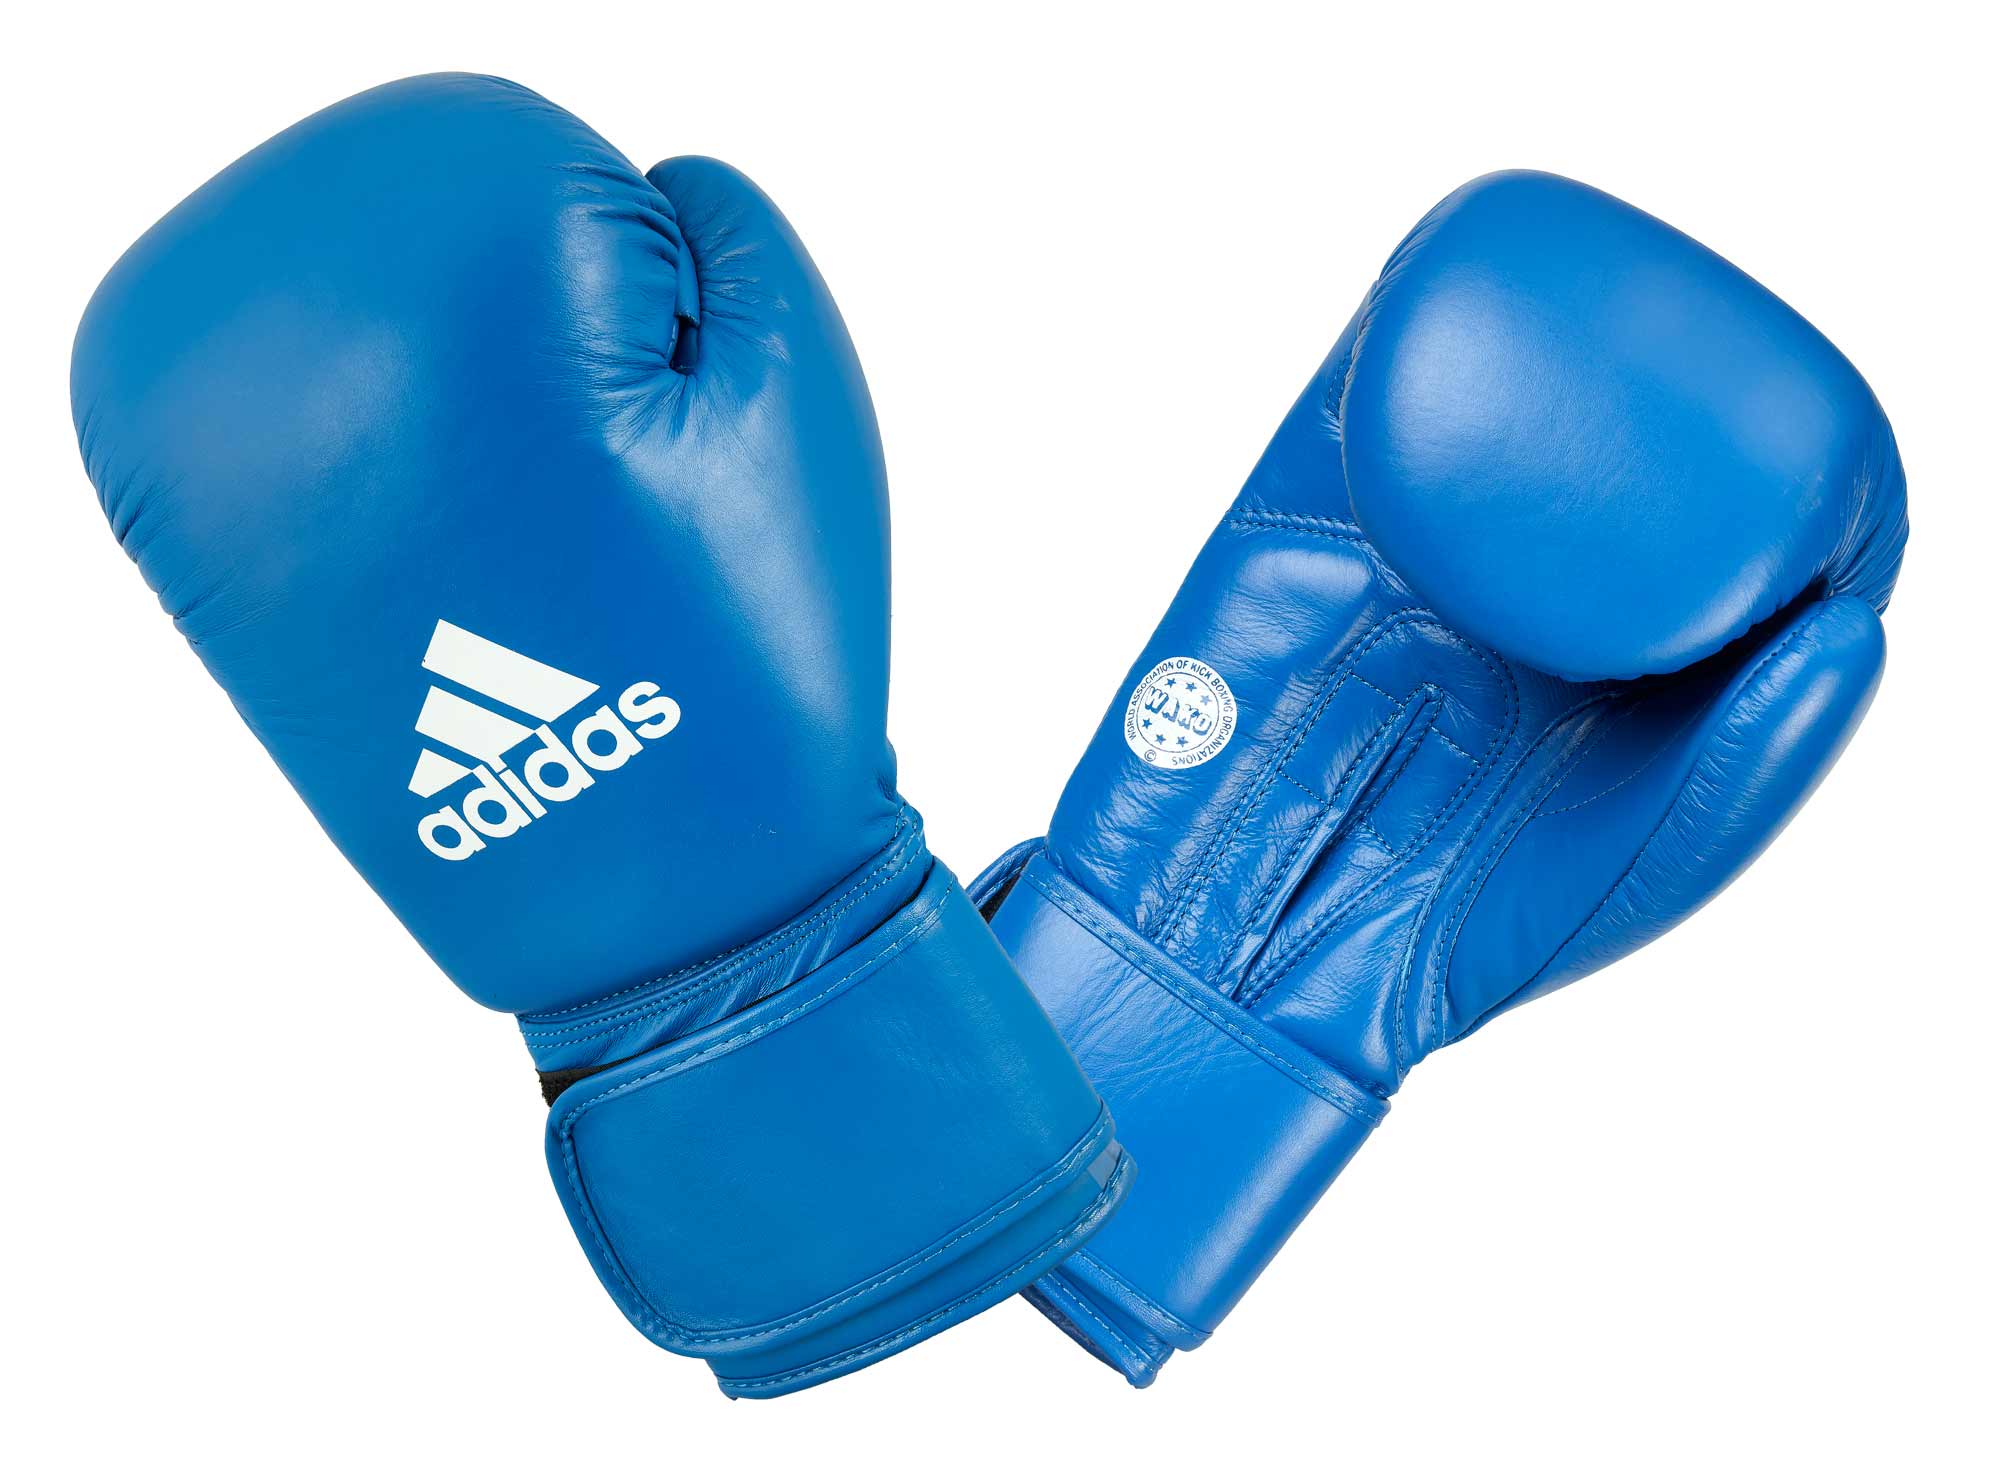 Adidas WAKO Kickboxing Gloves Leathe 10oz.